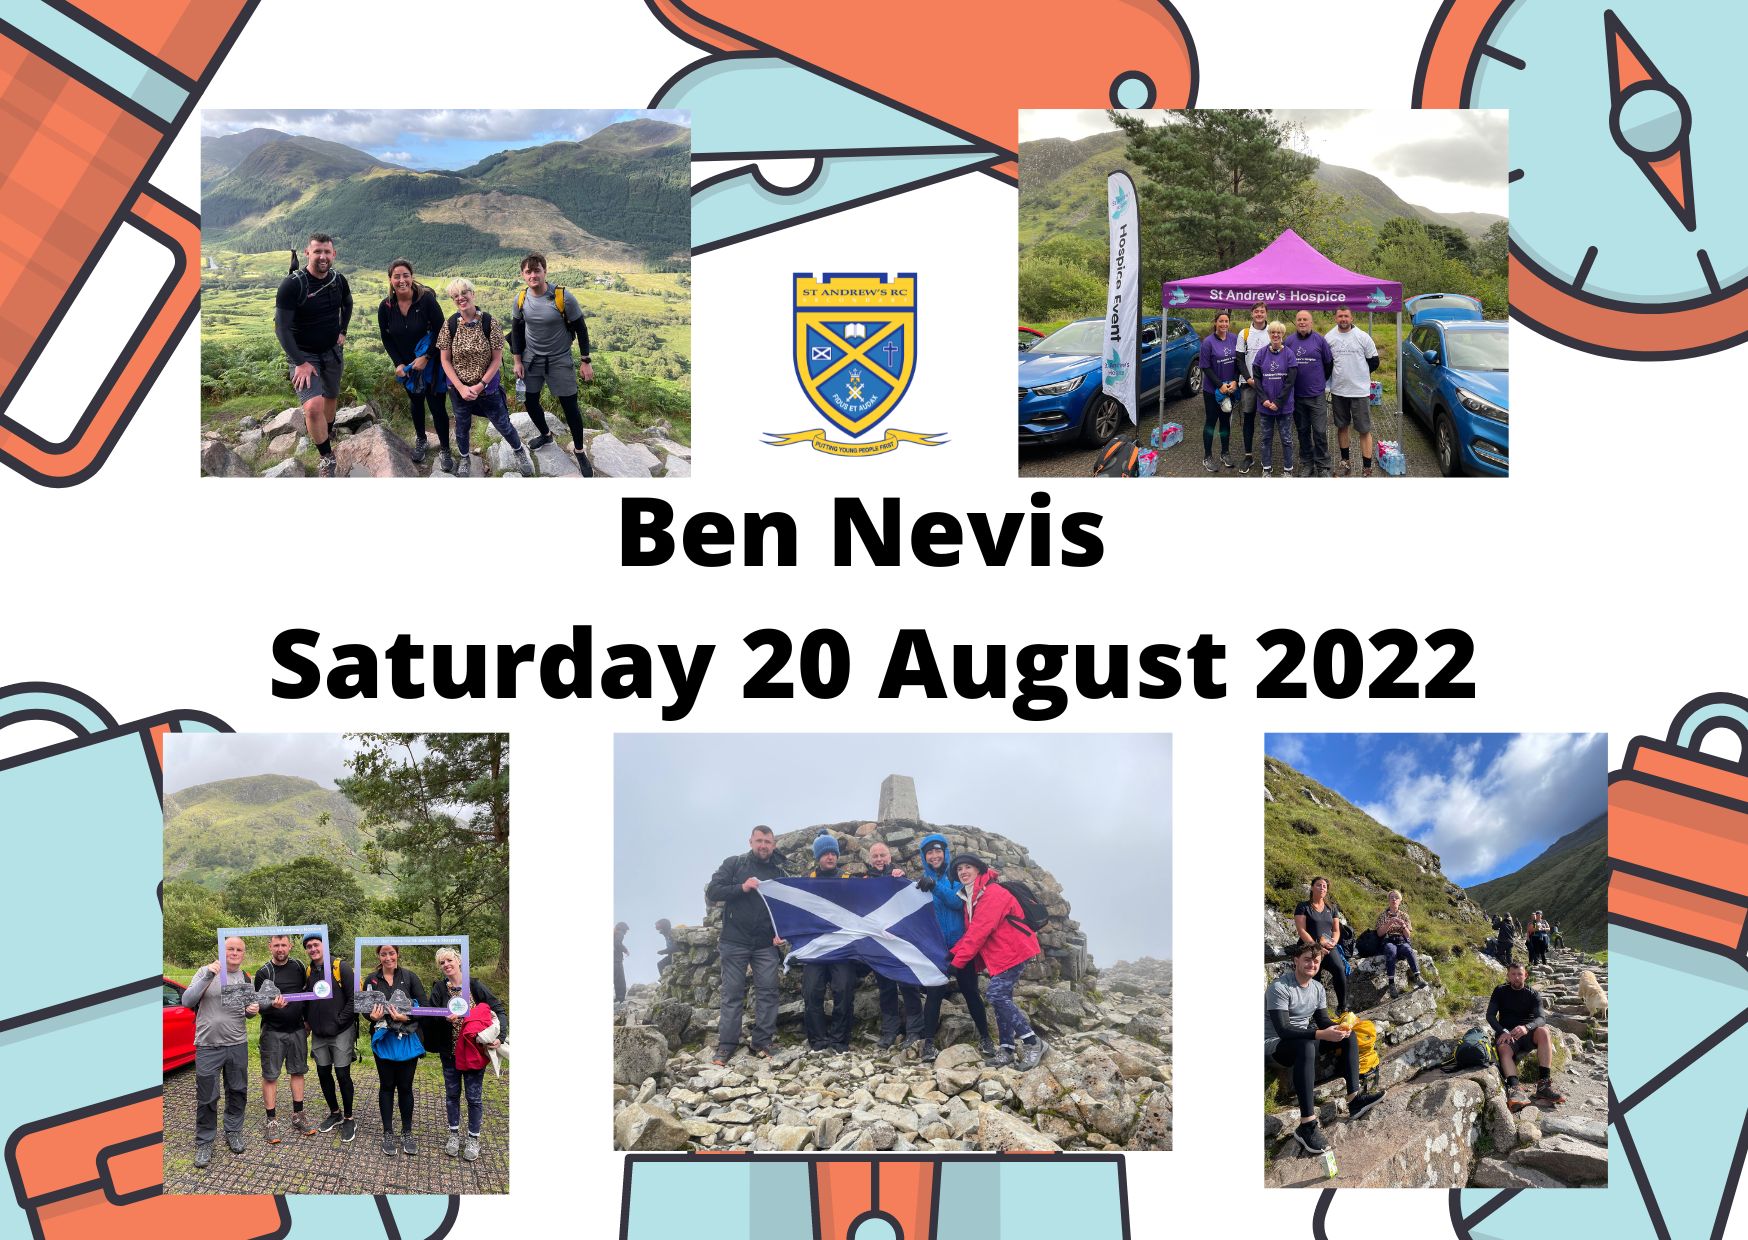 Ben Nevis Climb Saturday 20 August 2022